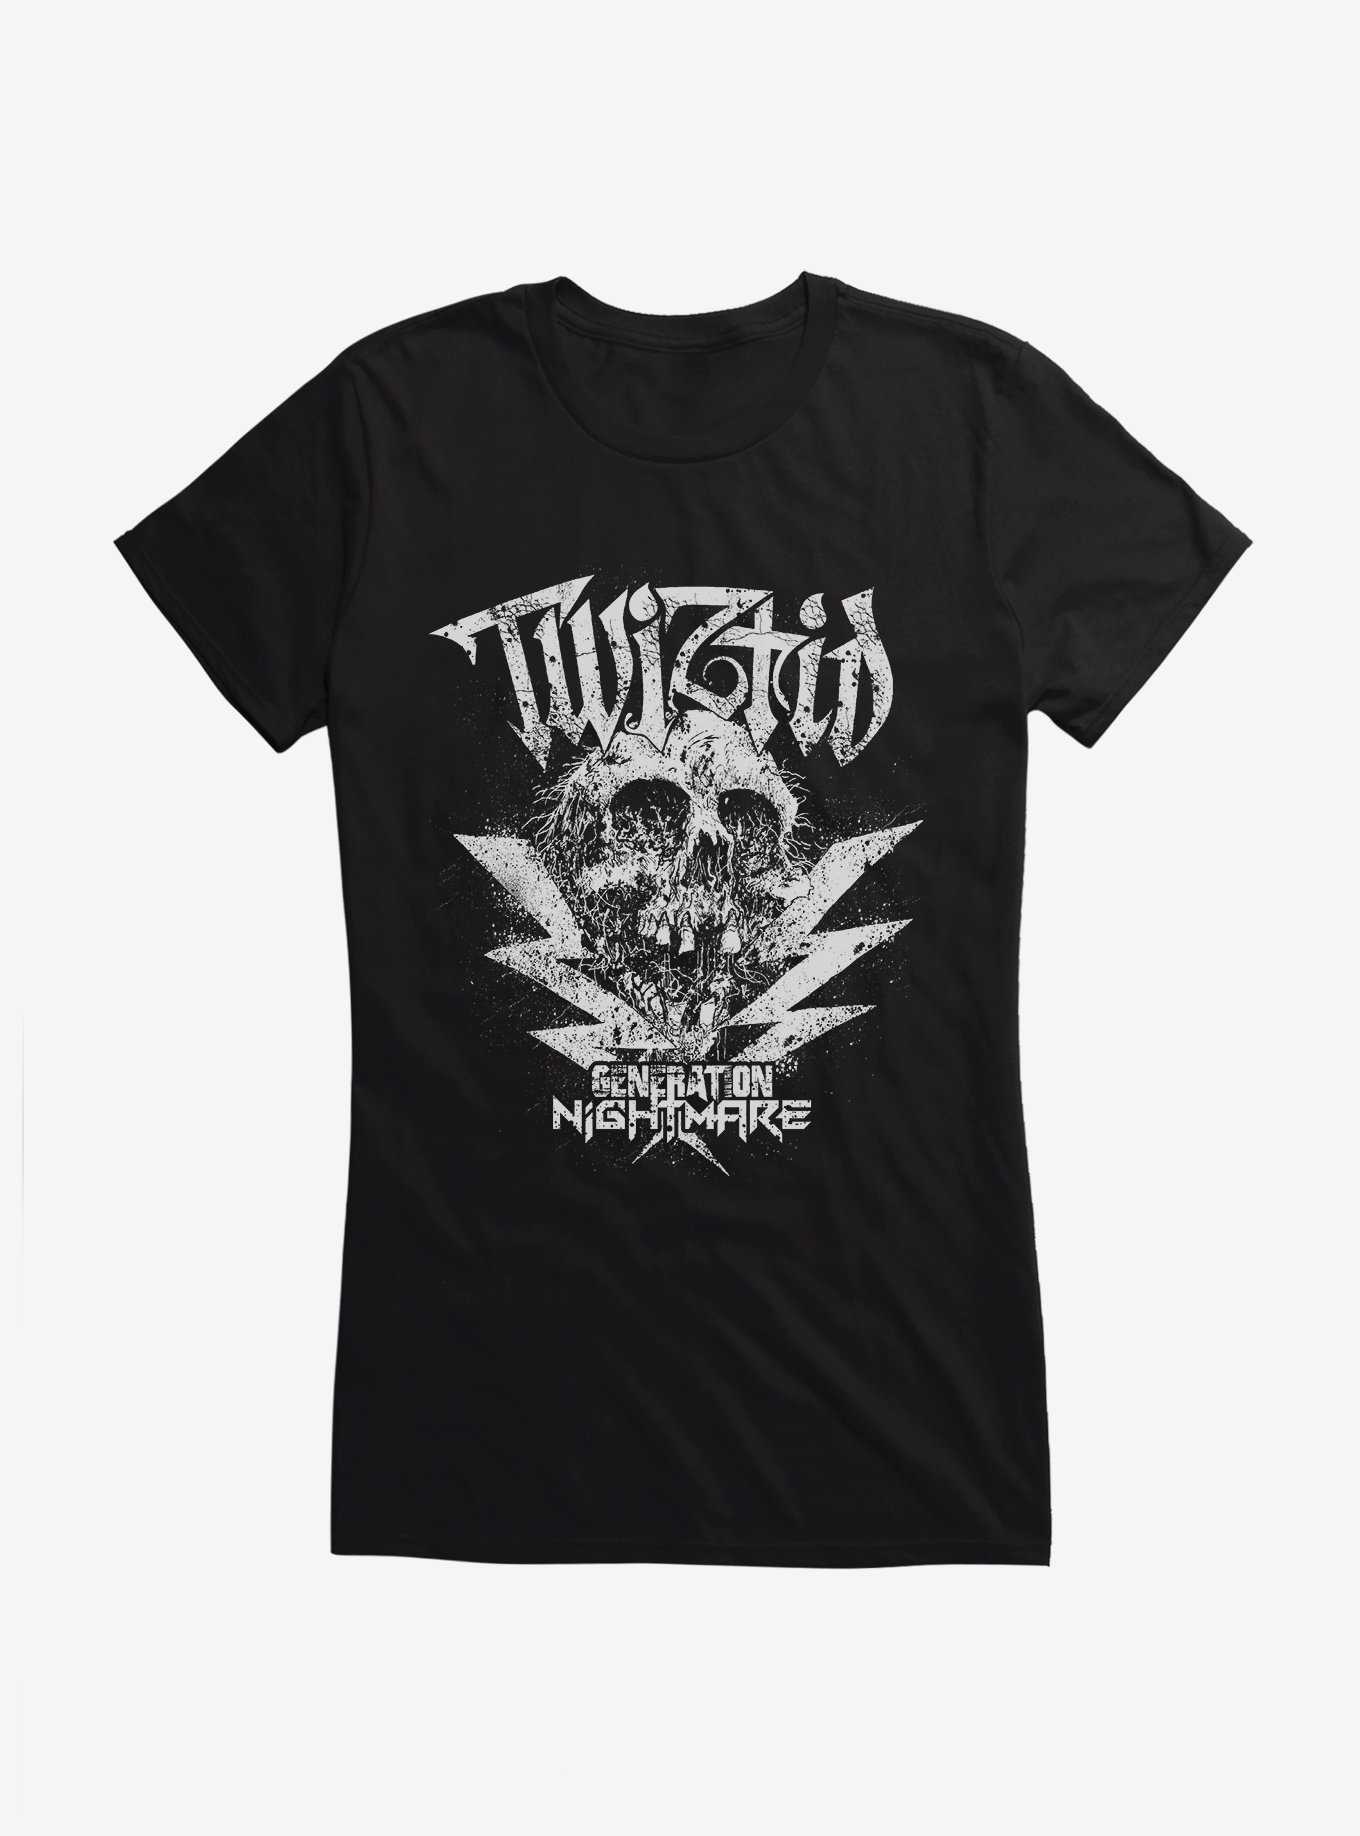 Twiztid Skull Girls T-Shirt, , hi-res